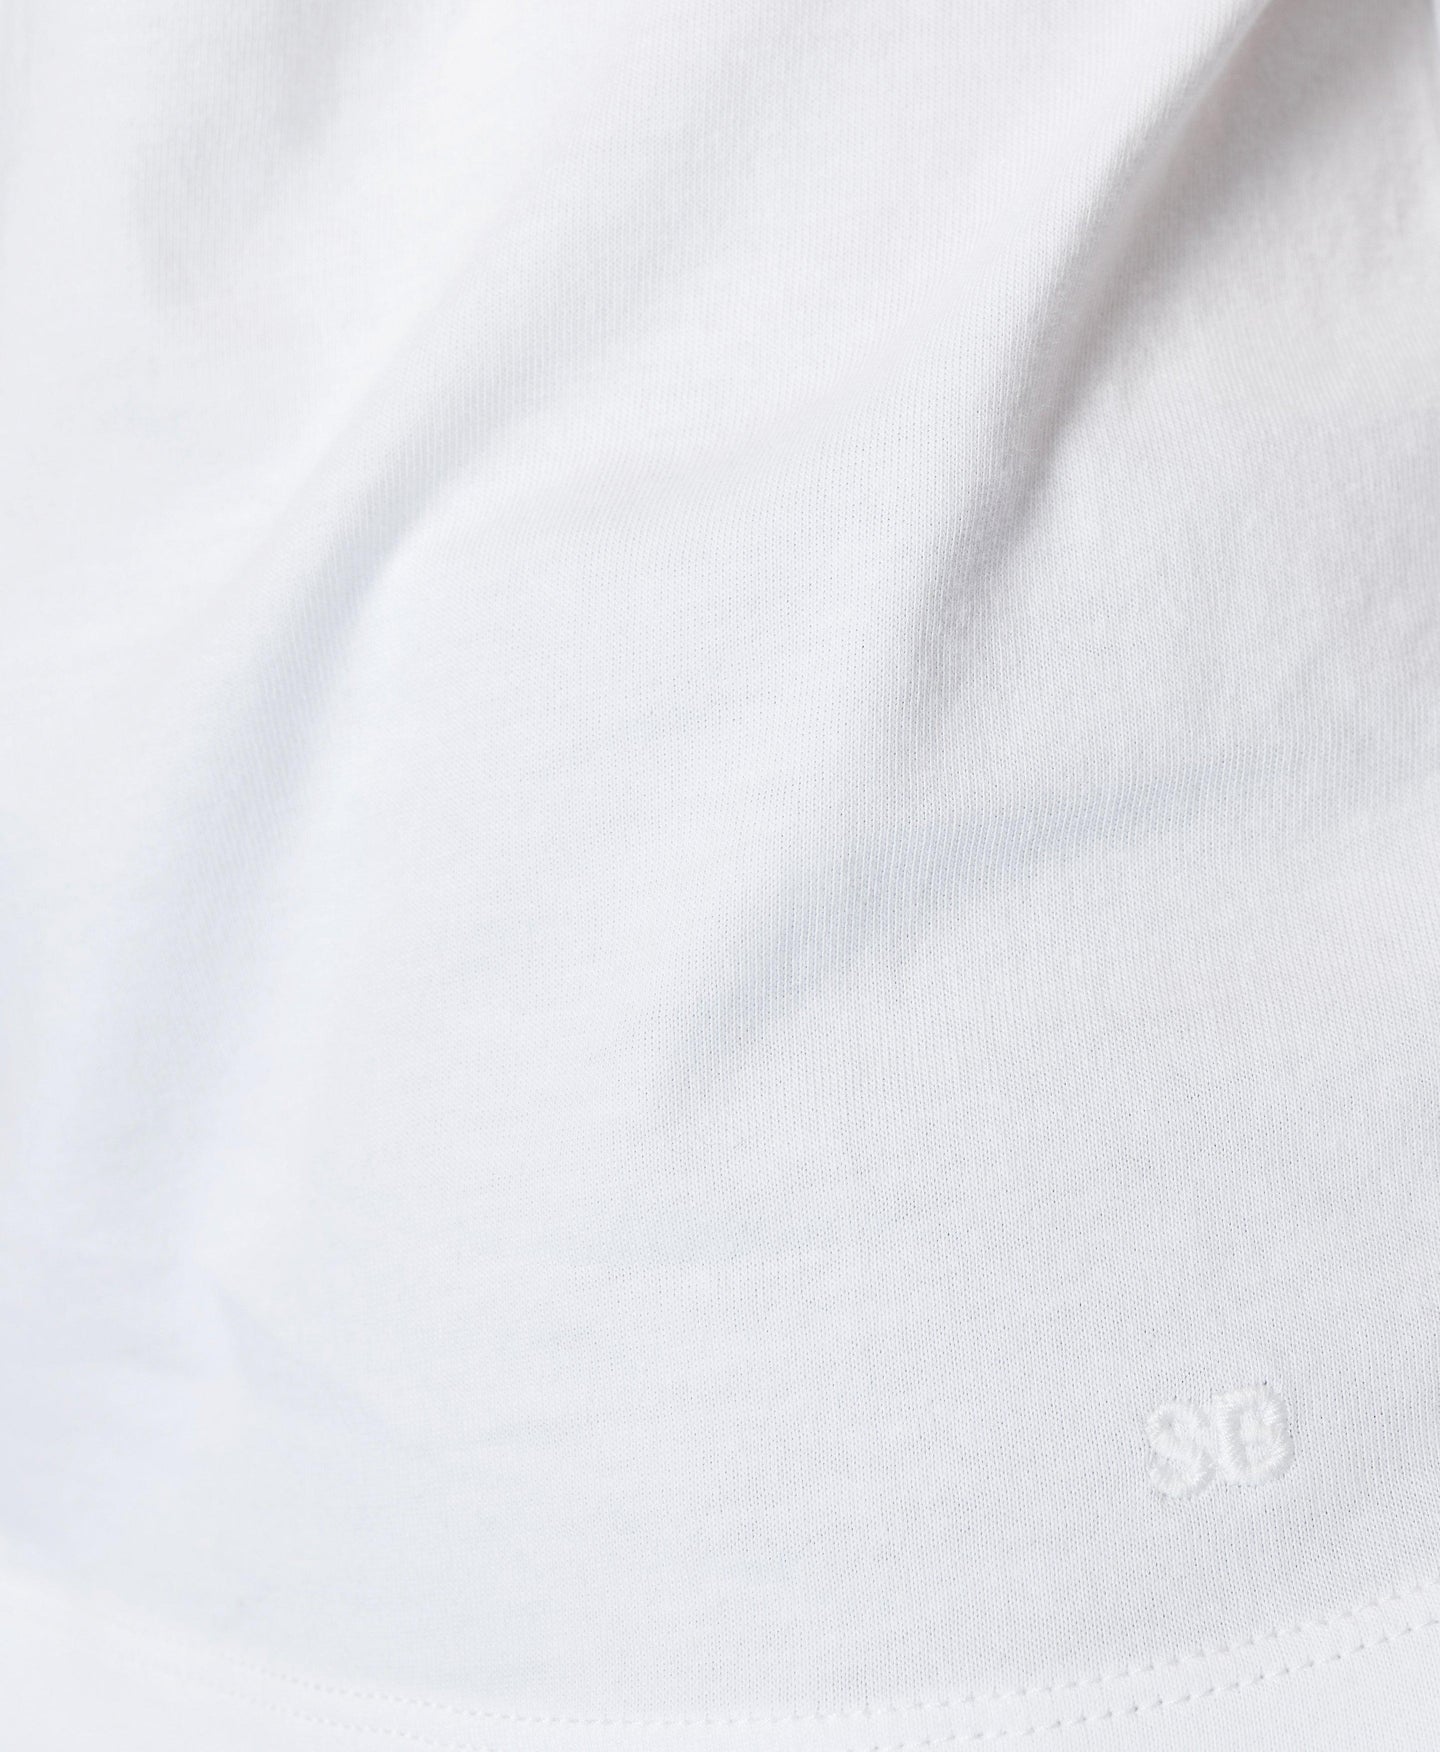 Essential Crew Neck T-shirt Sb9687 White